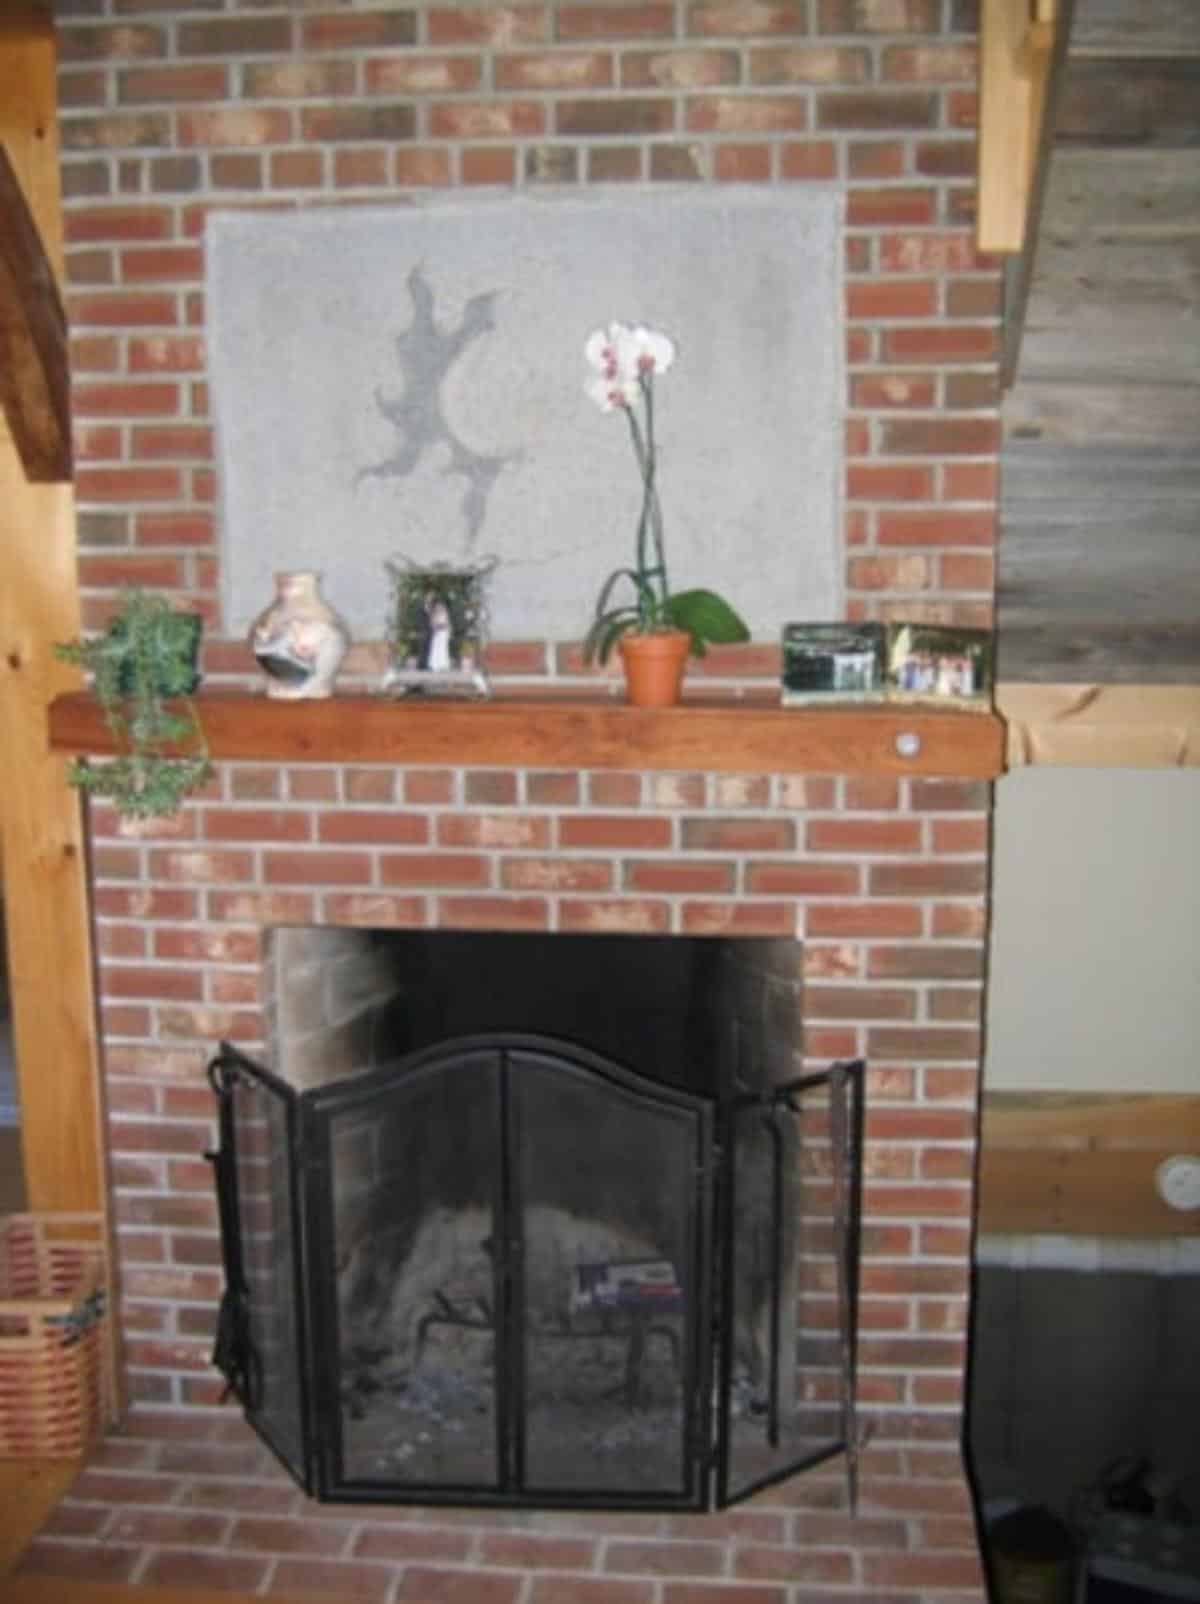 An indoor fireplace.